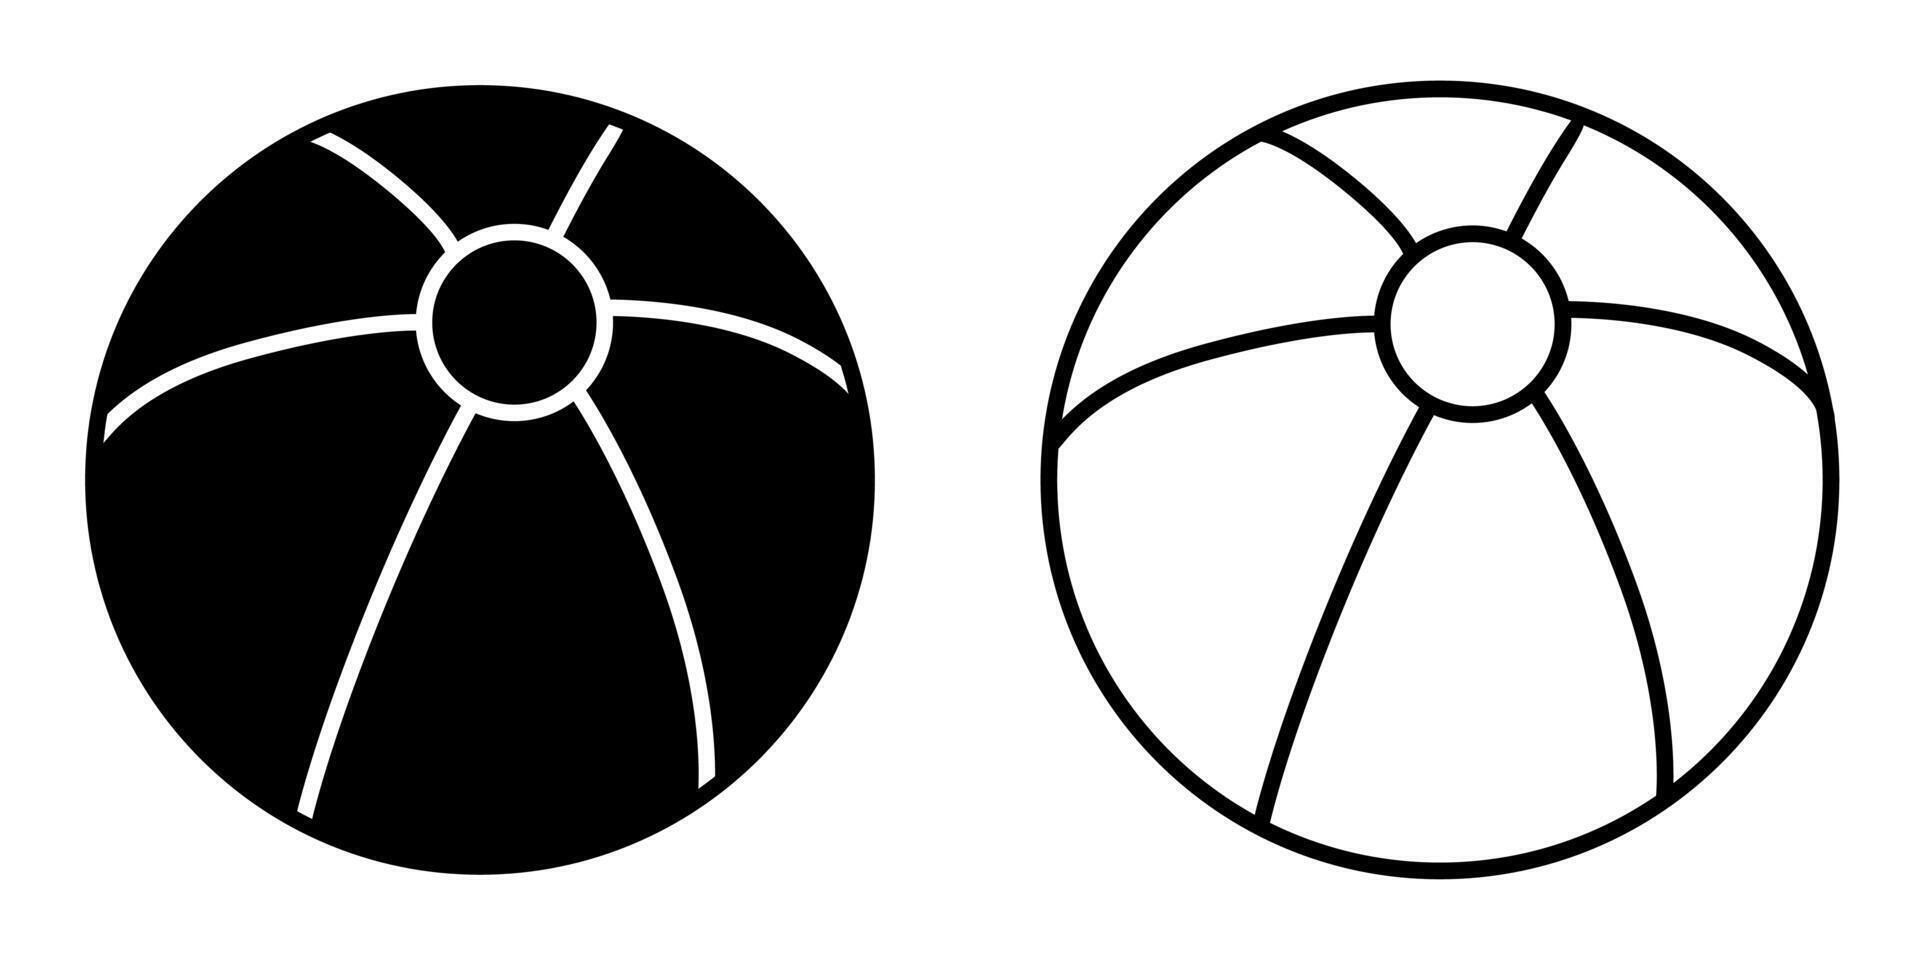 beach ball black outline icon sports design template vector illustration